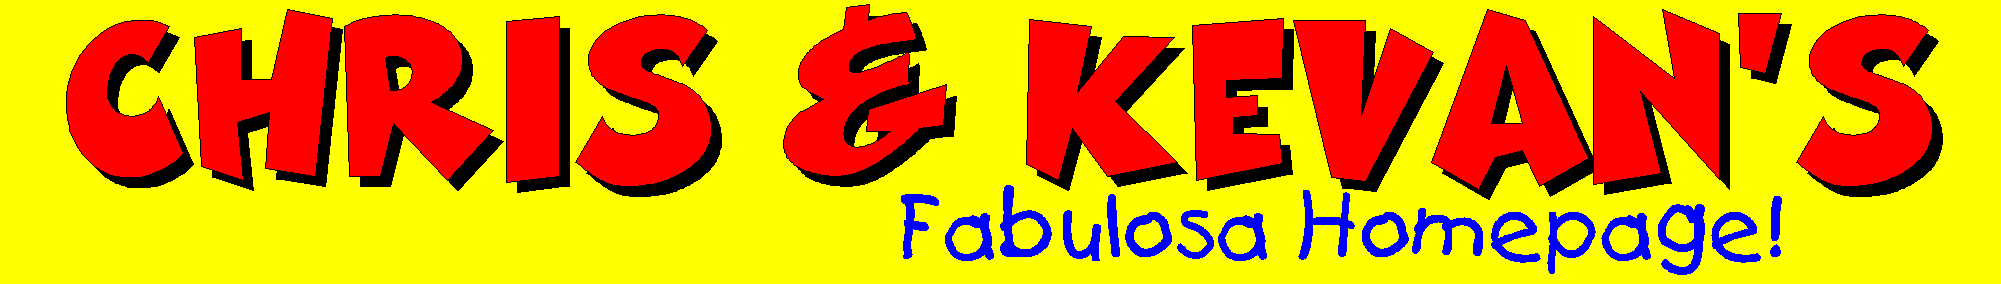 Chris&Kevan's Fabulosa Homepage header